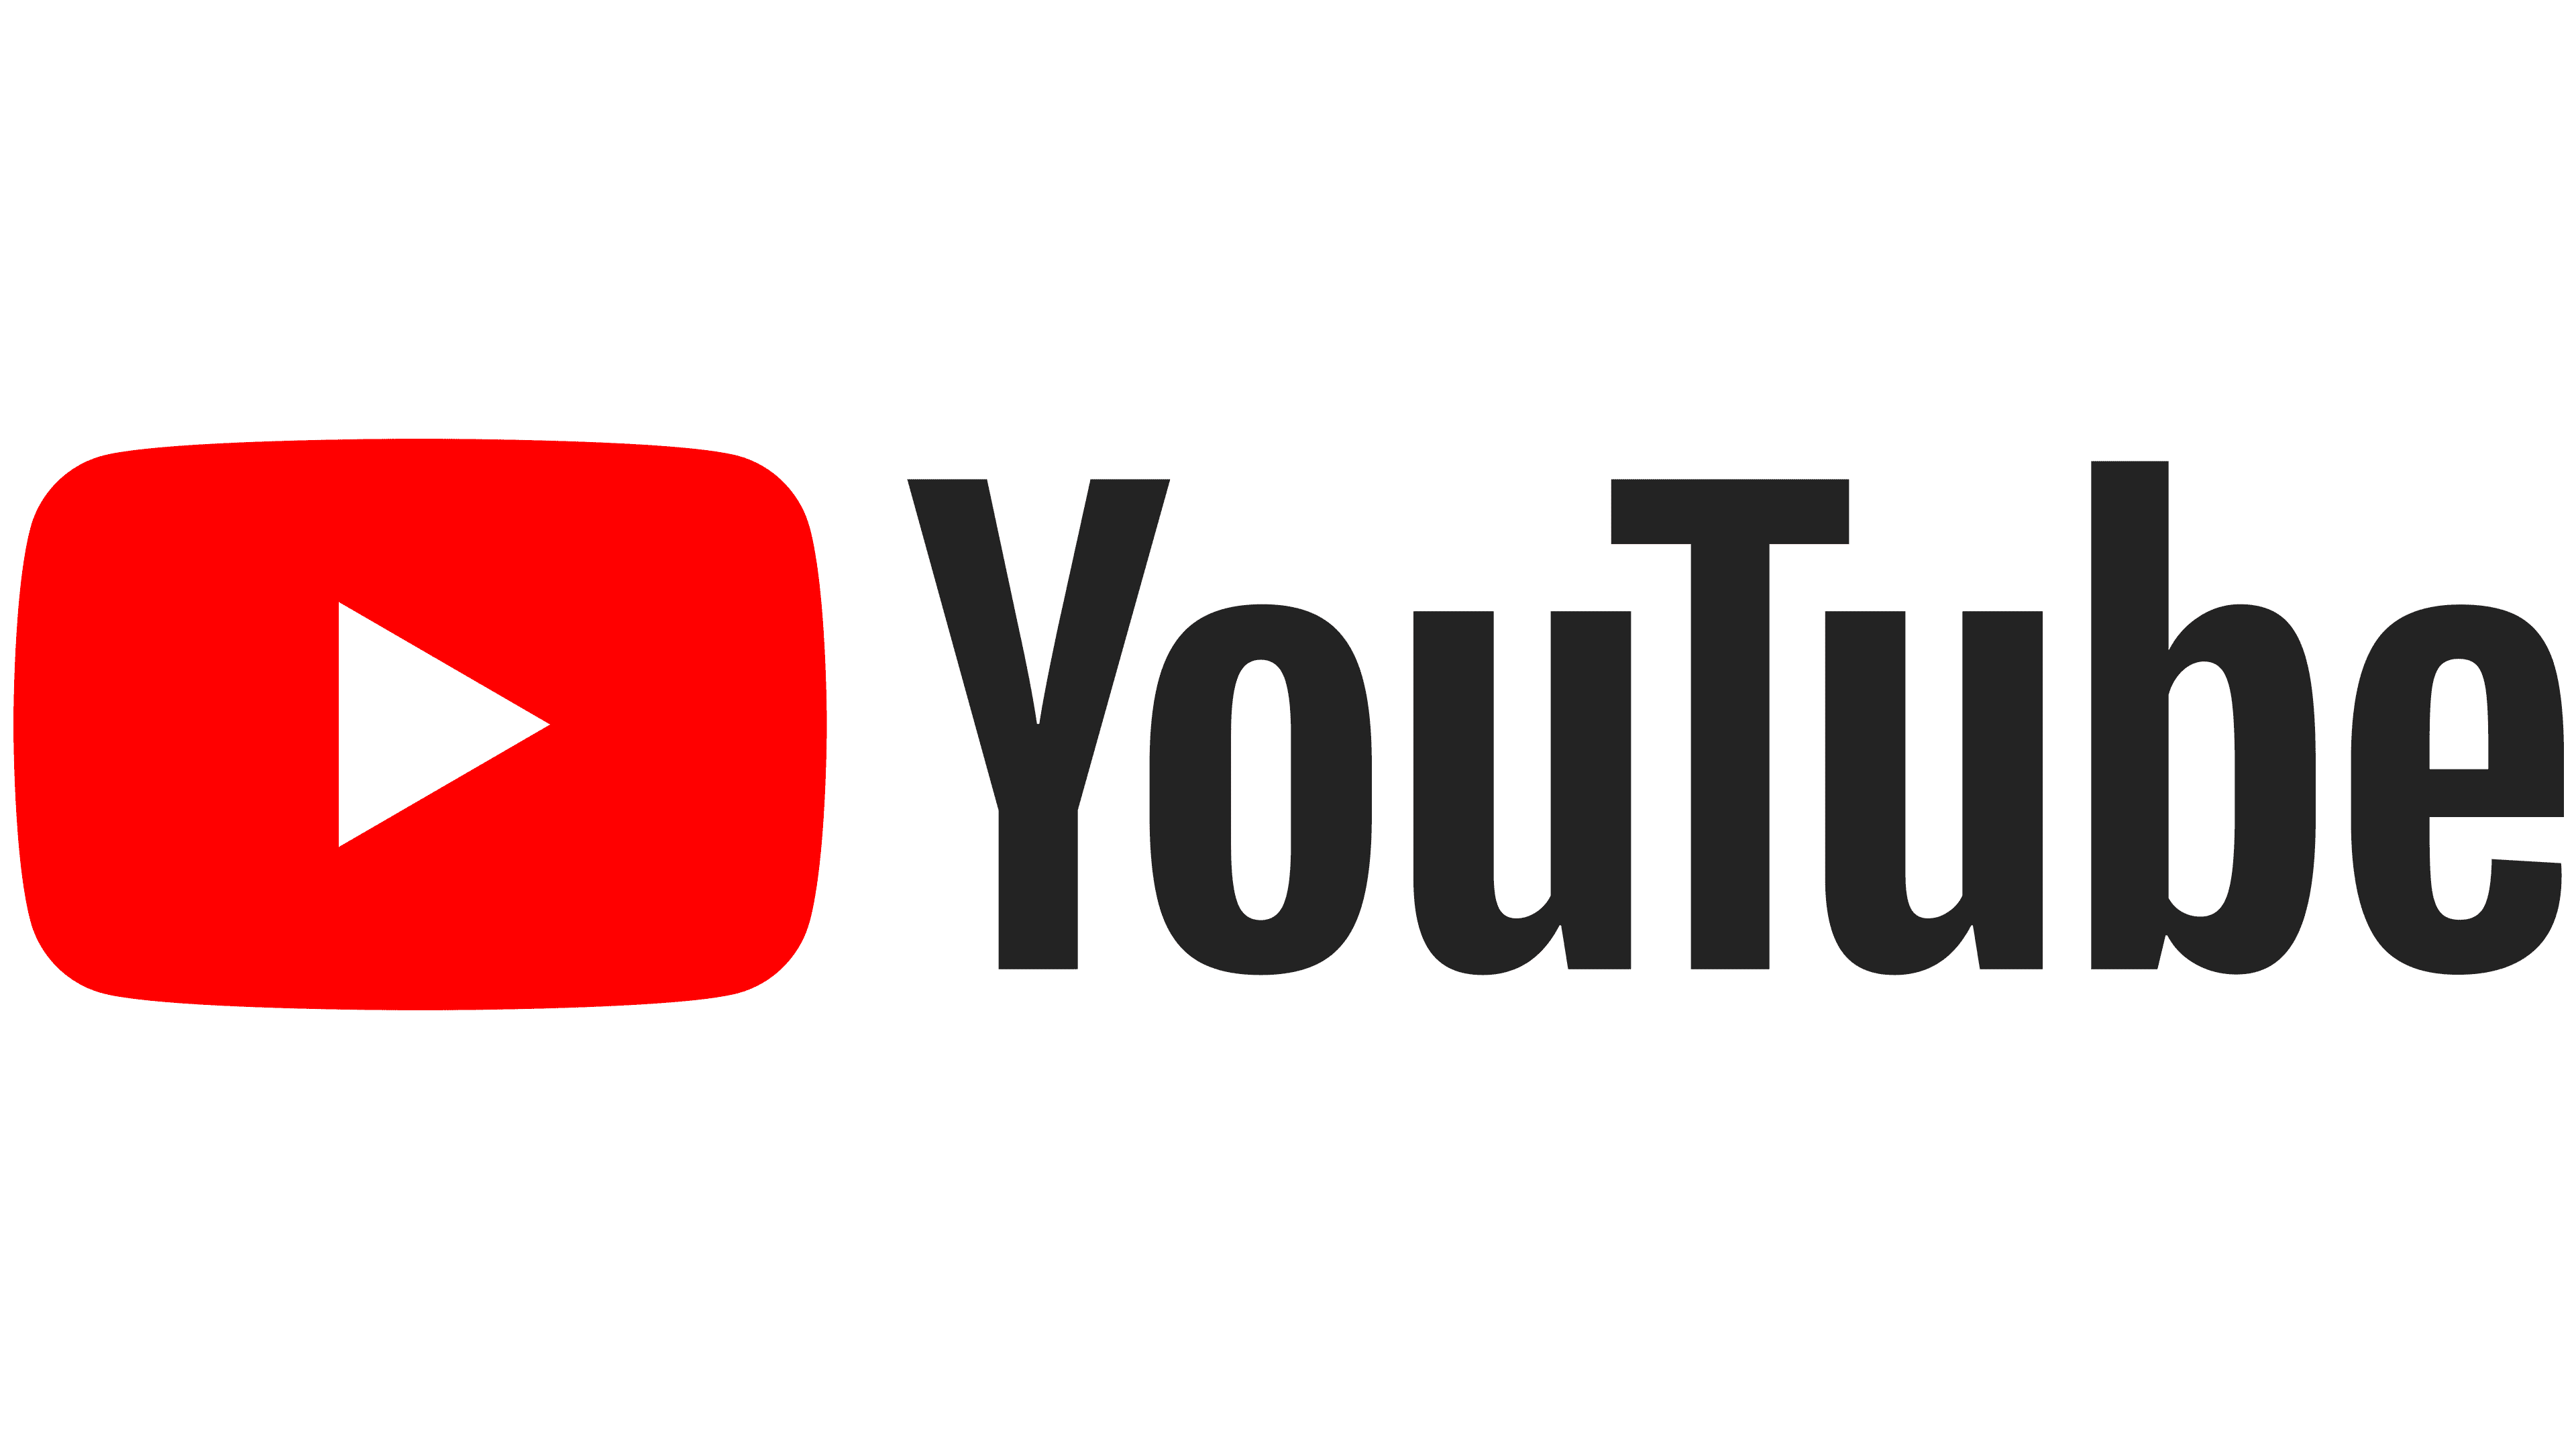 Последний версия youtube без рекламы. Логотип youtube. Yutu. Знак ютуба. Лого ютуб на прозрачном фоне.